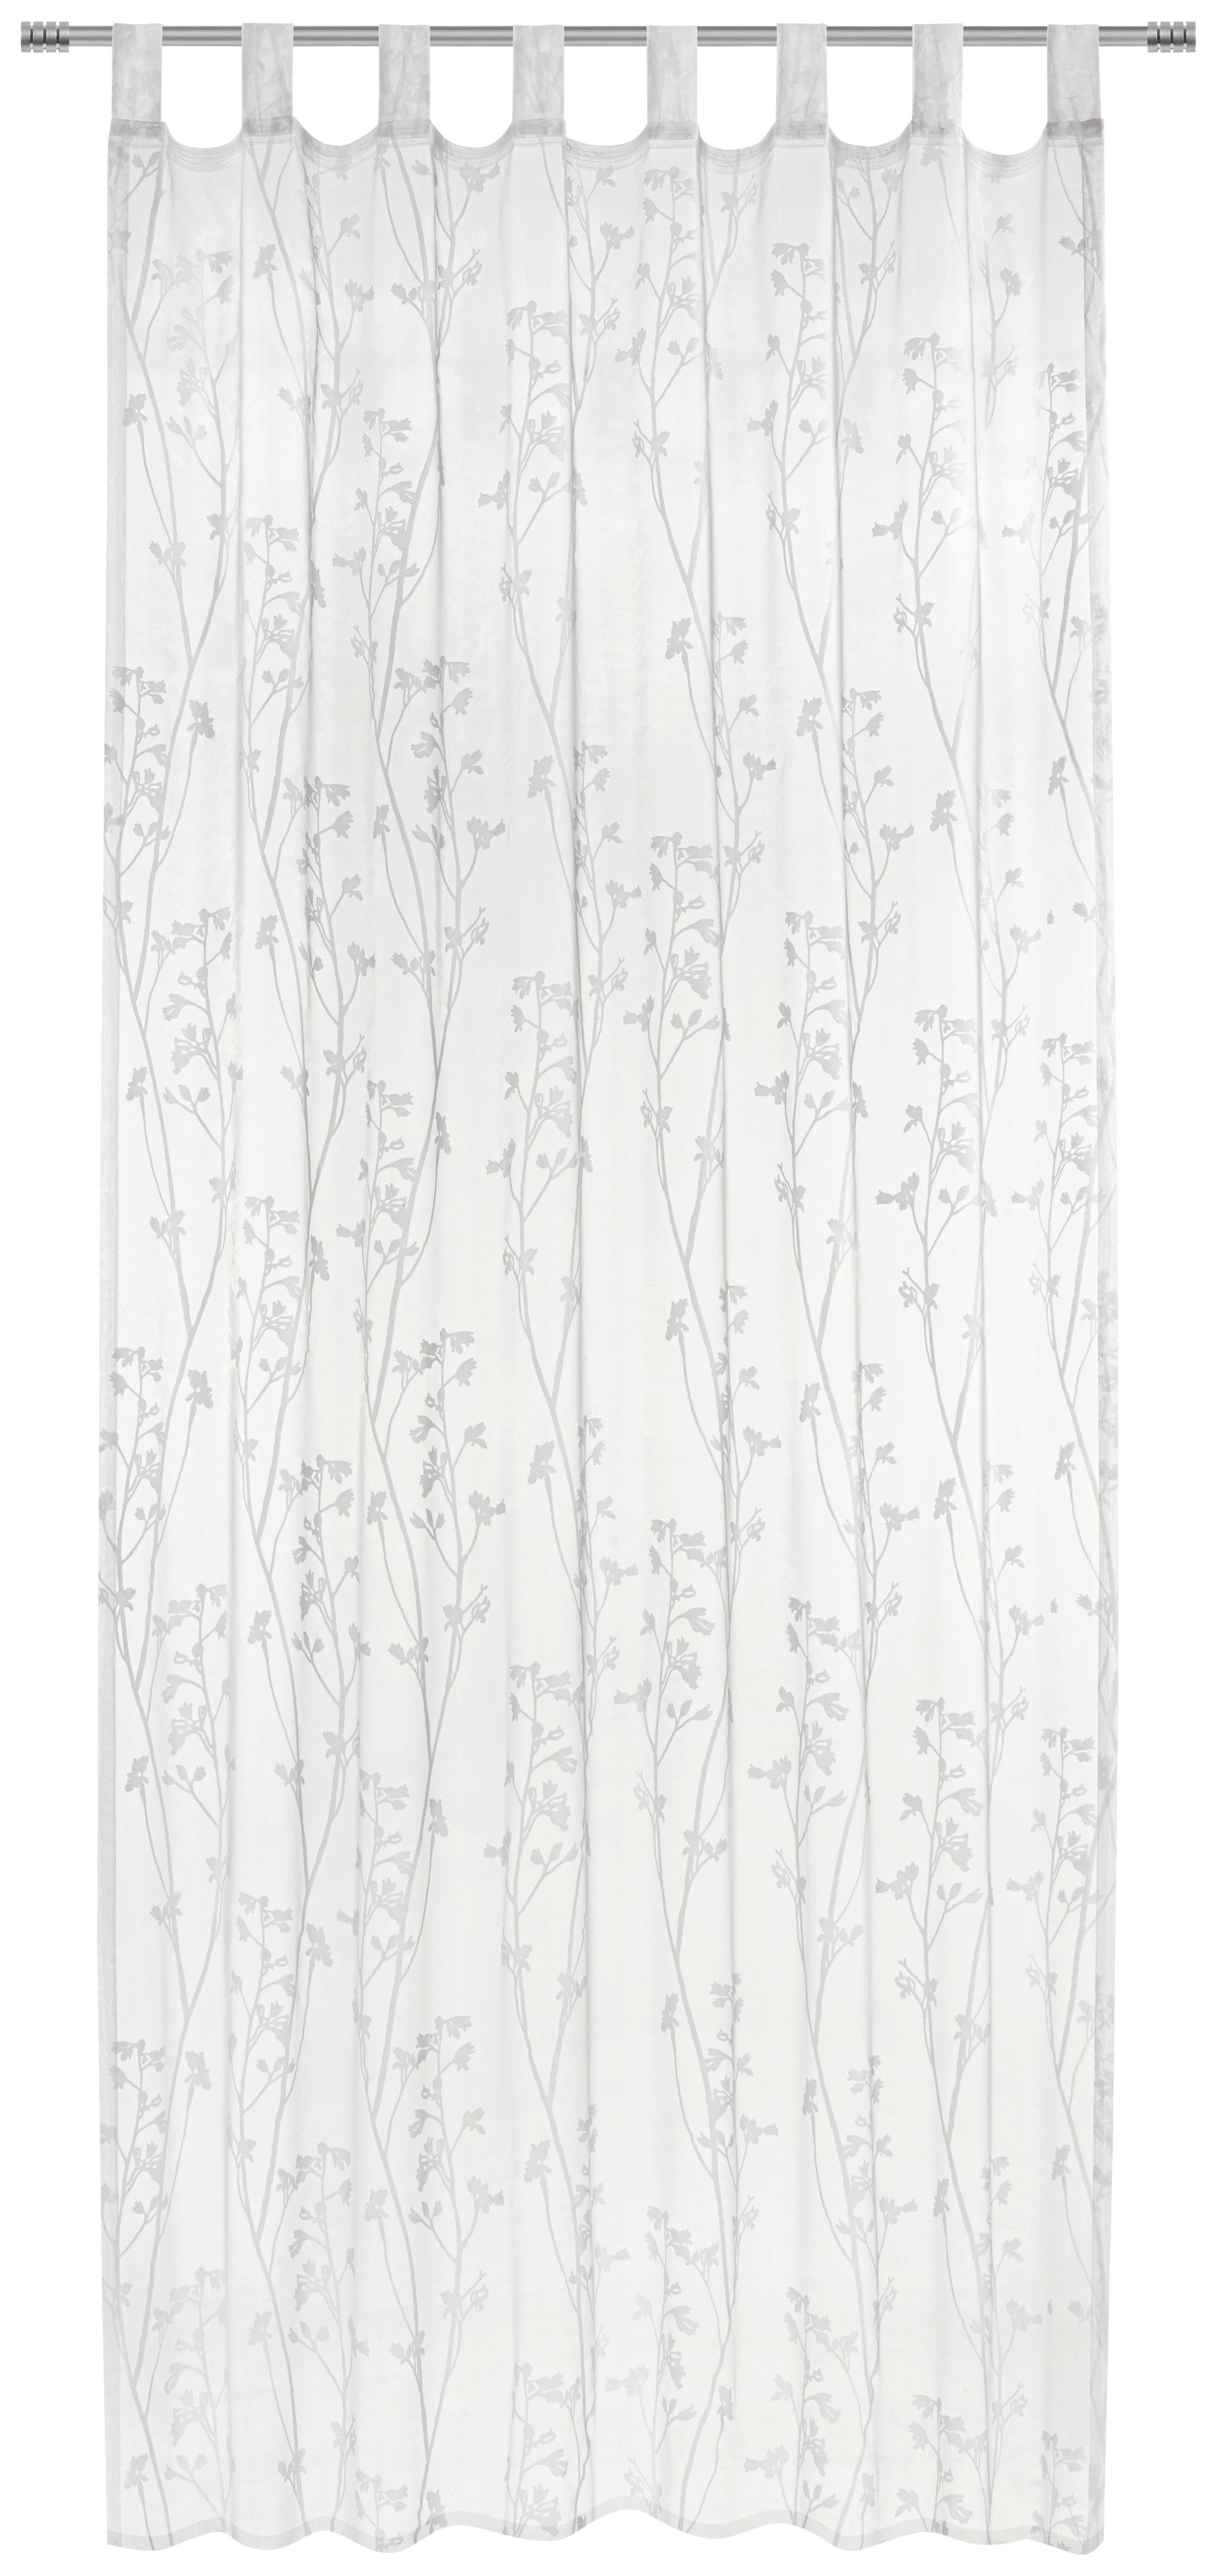 HÄLLBANDSLÄNGD transparent  - vit, Trend, textil (140/245cm) - Boxxx